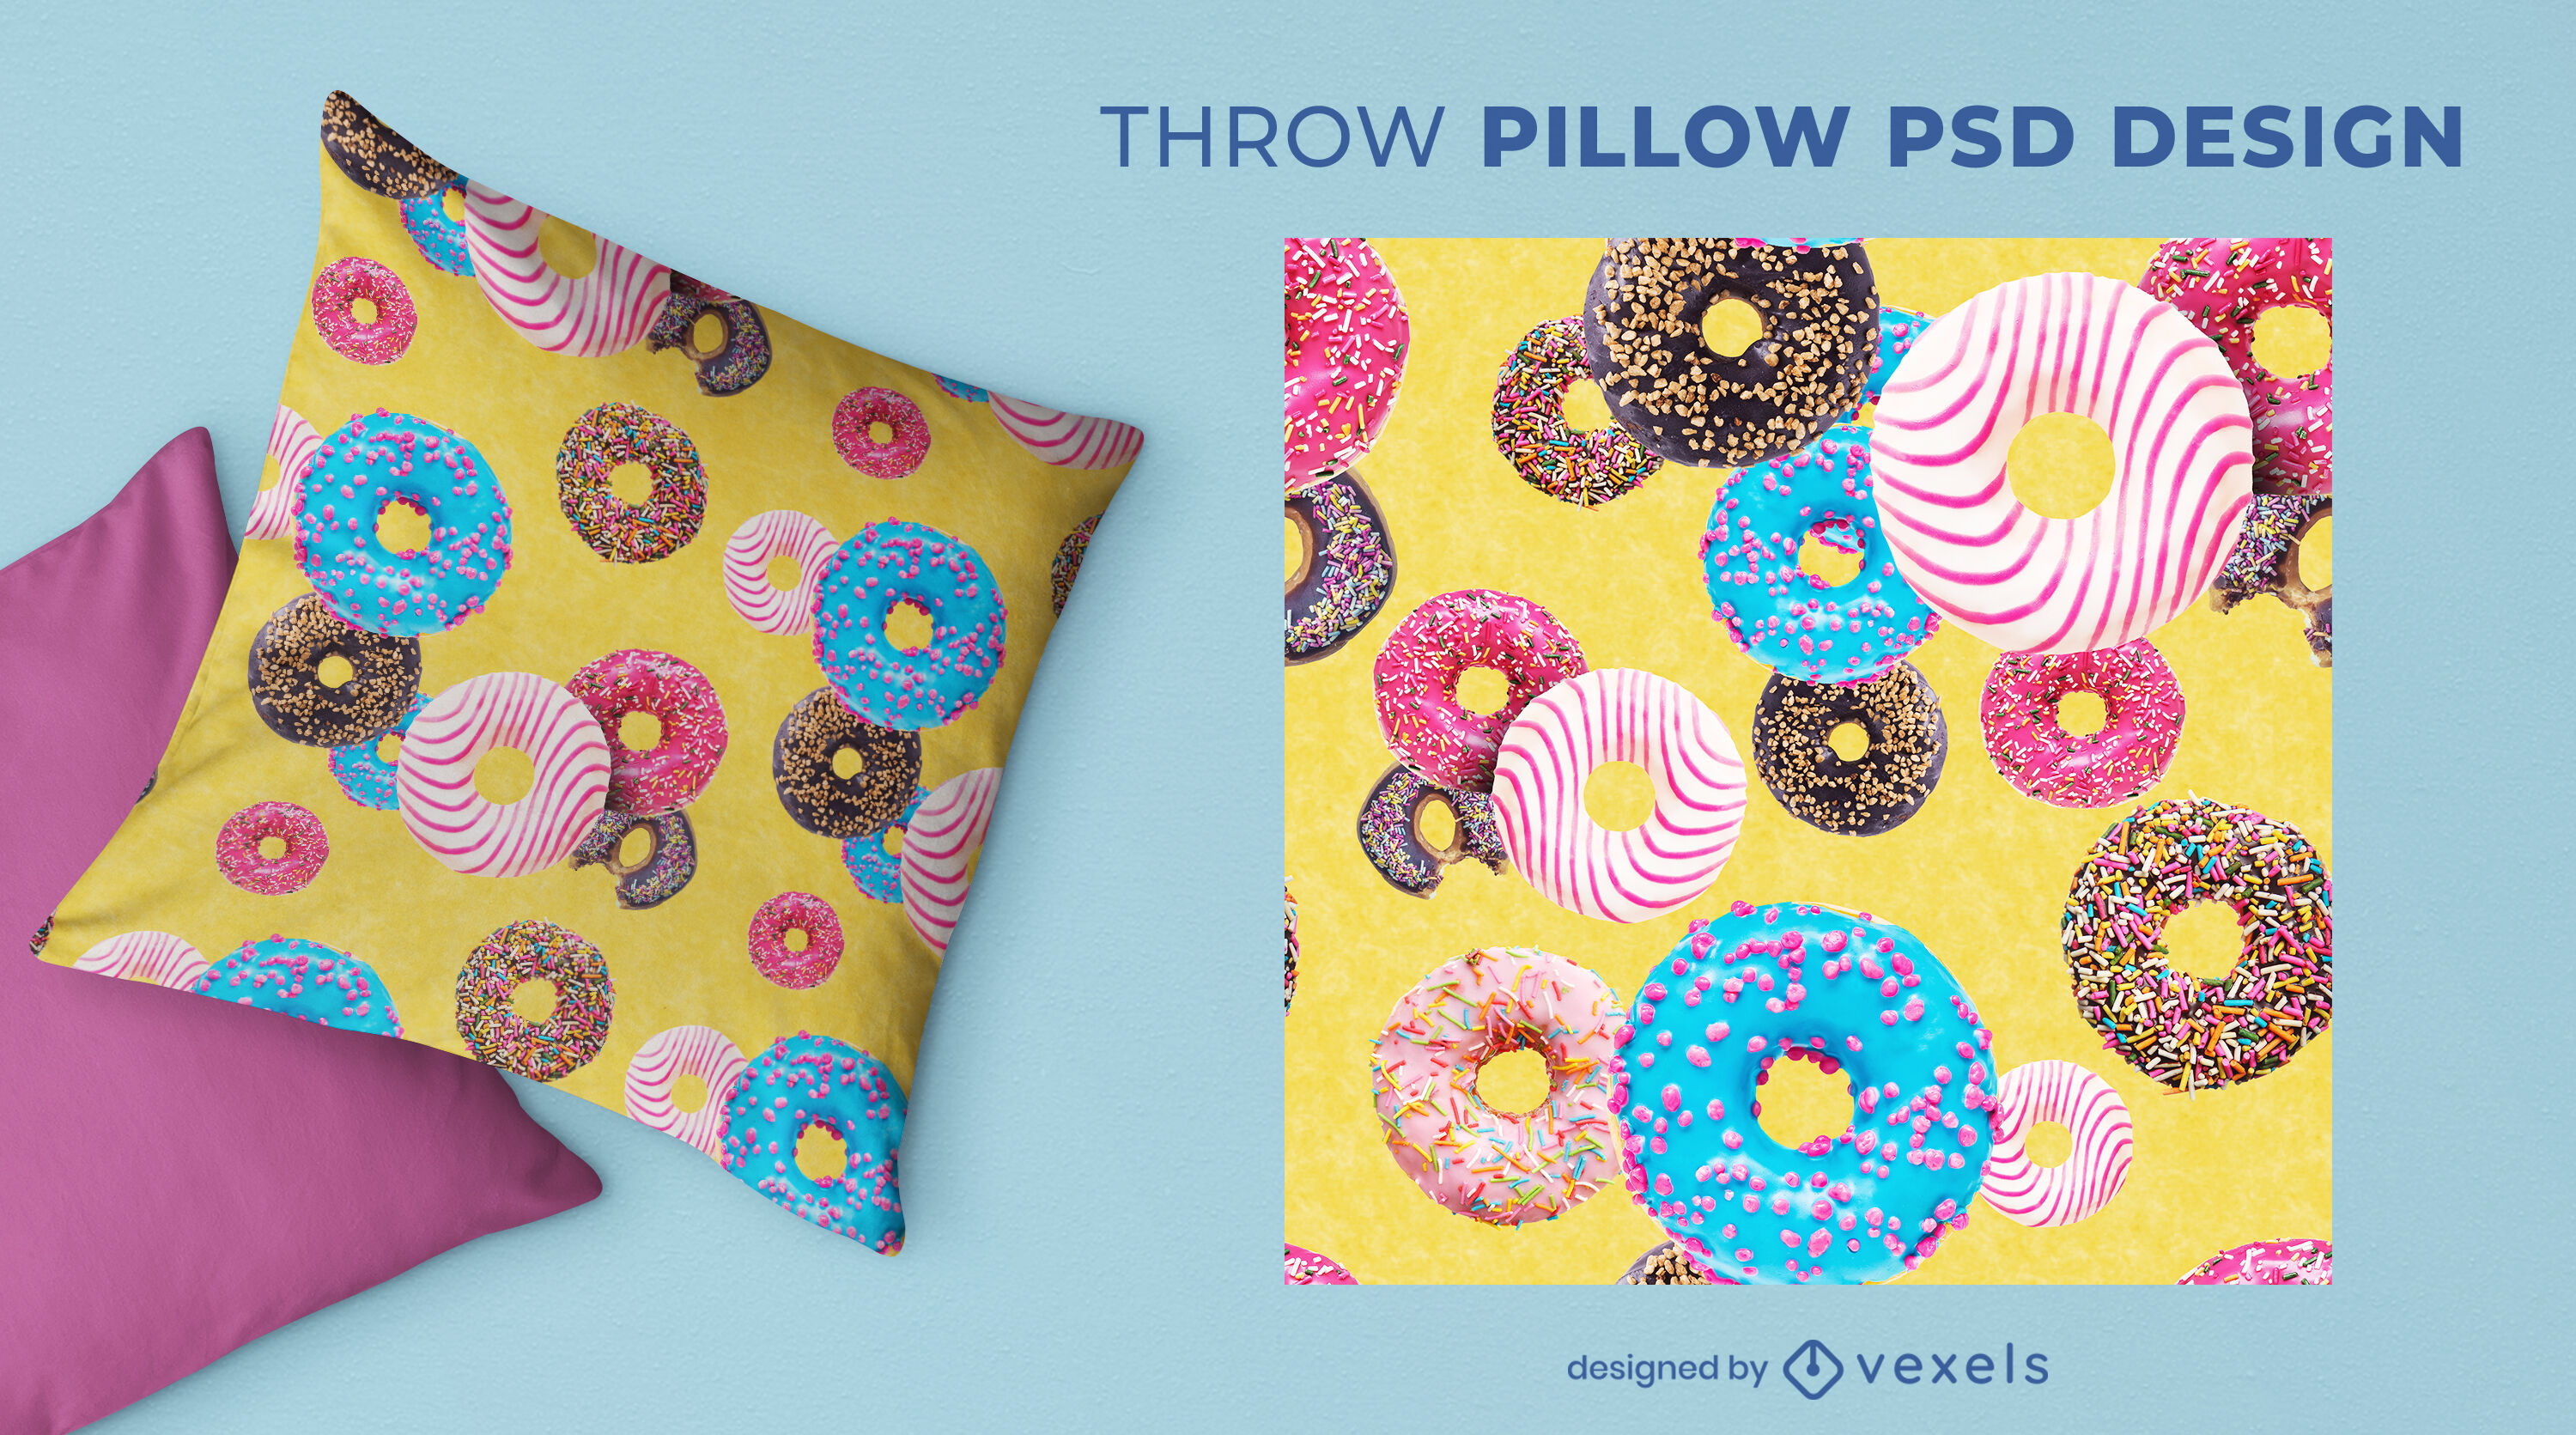 Glazed donuts throw pillow design 